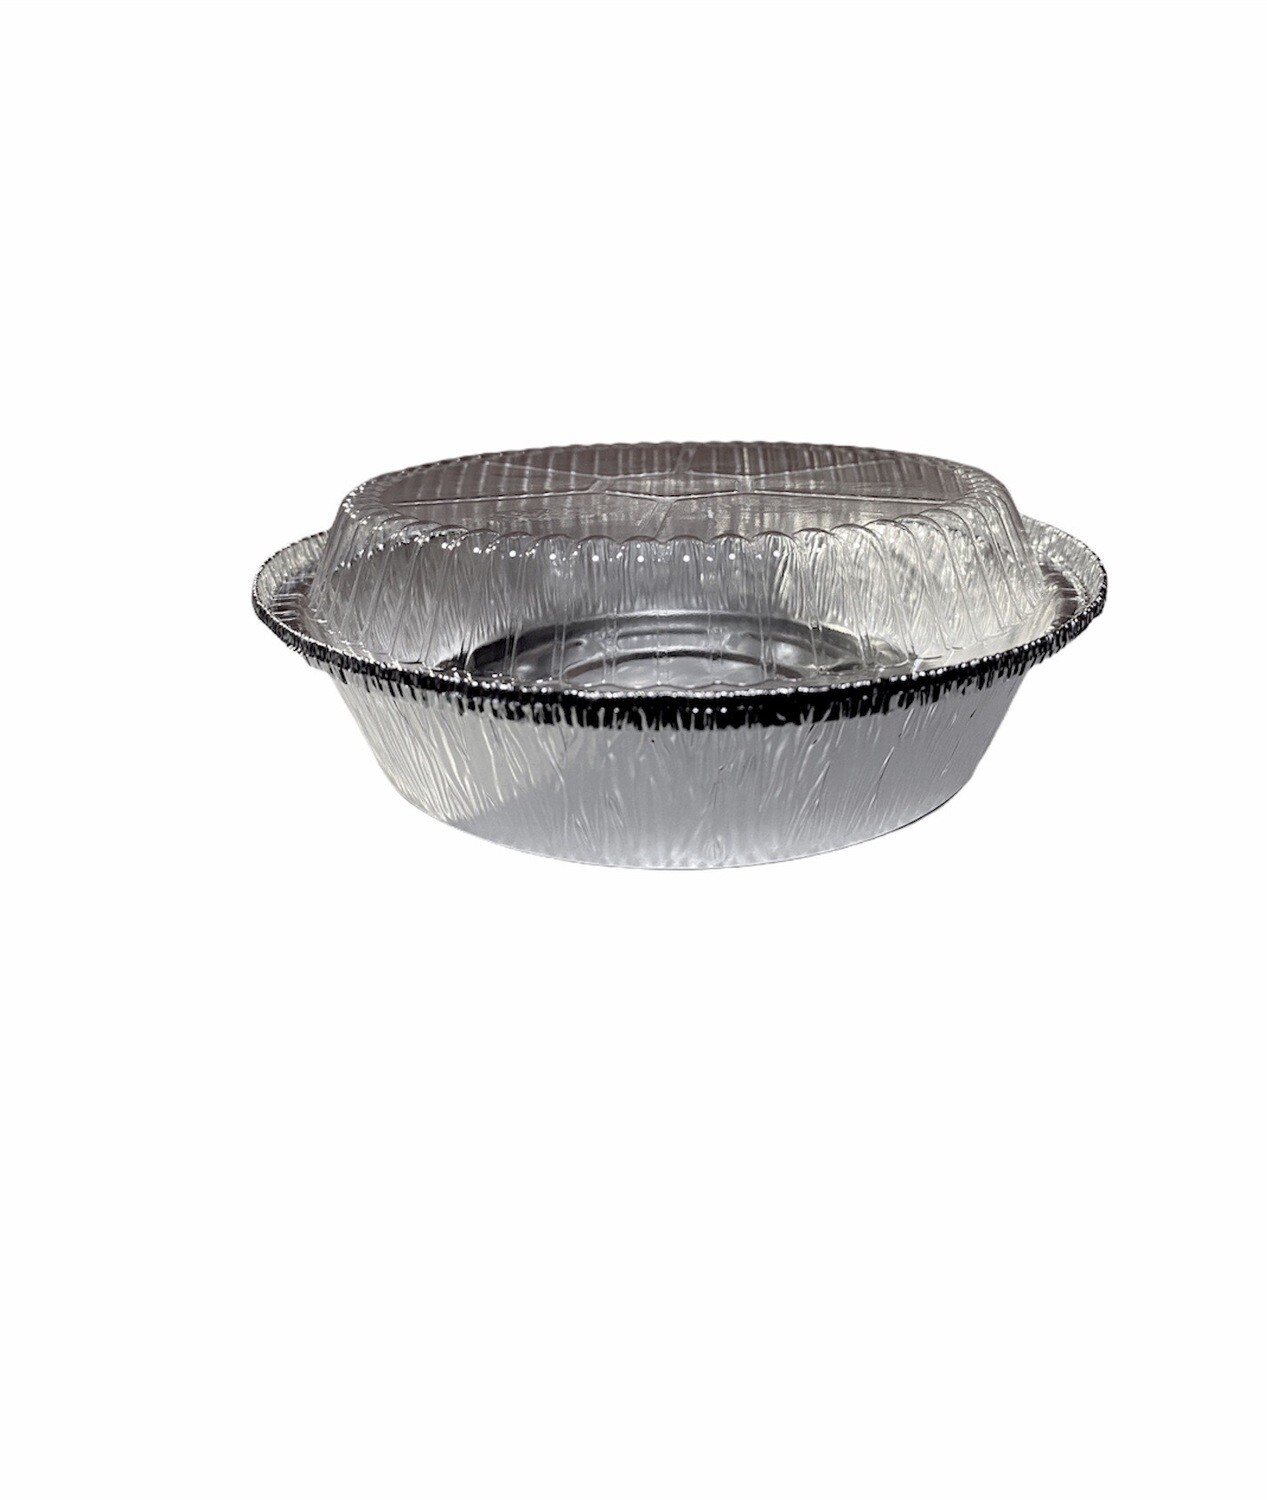 R1 Small, Round Aluminum Pan